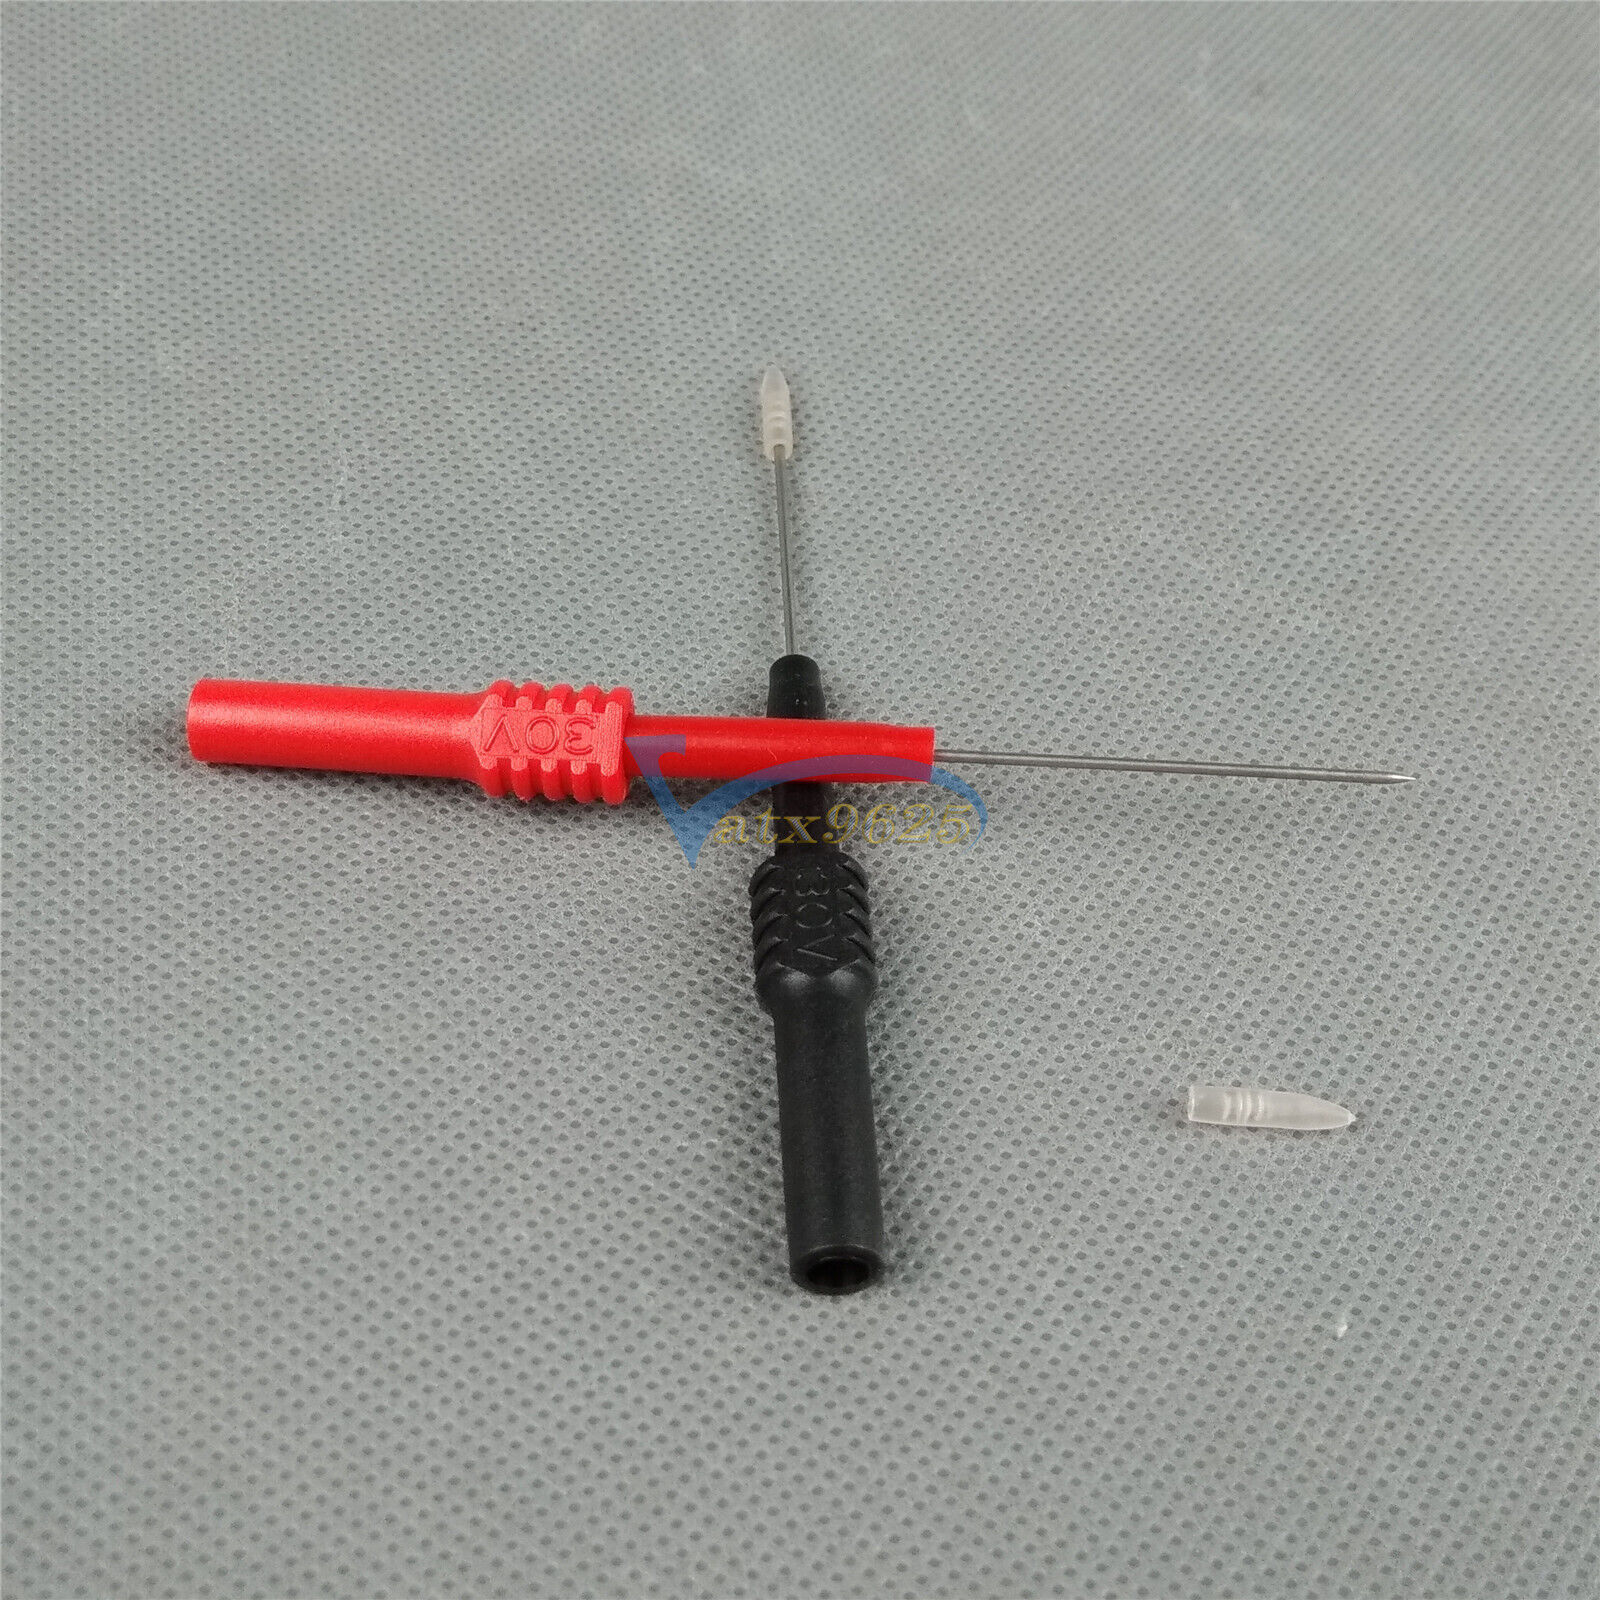 1pcs Insulation Piercing Needle 4mm Test Probe Red/black